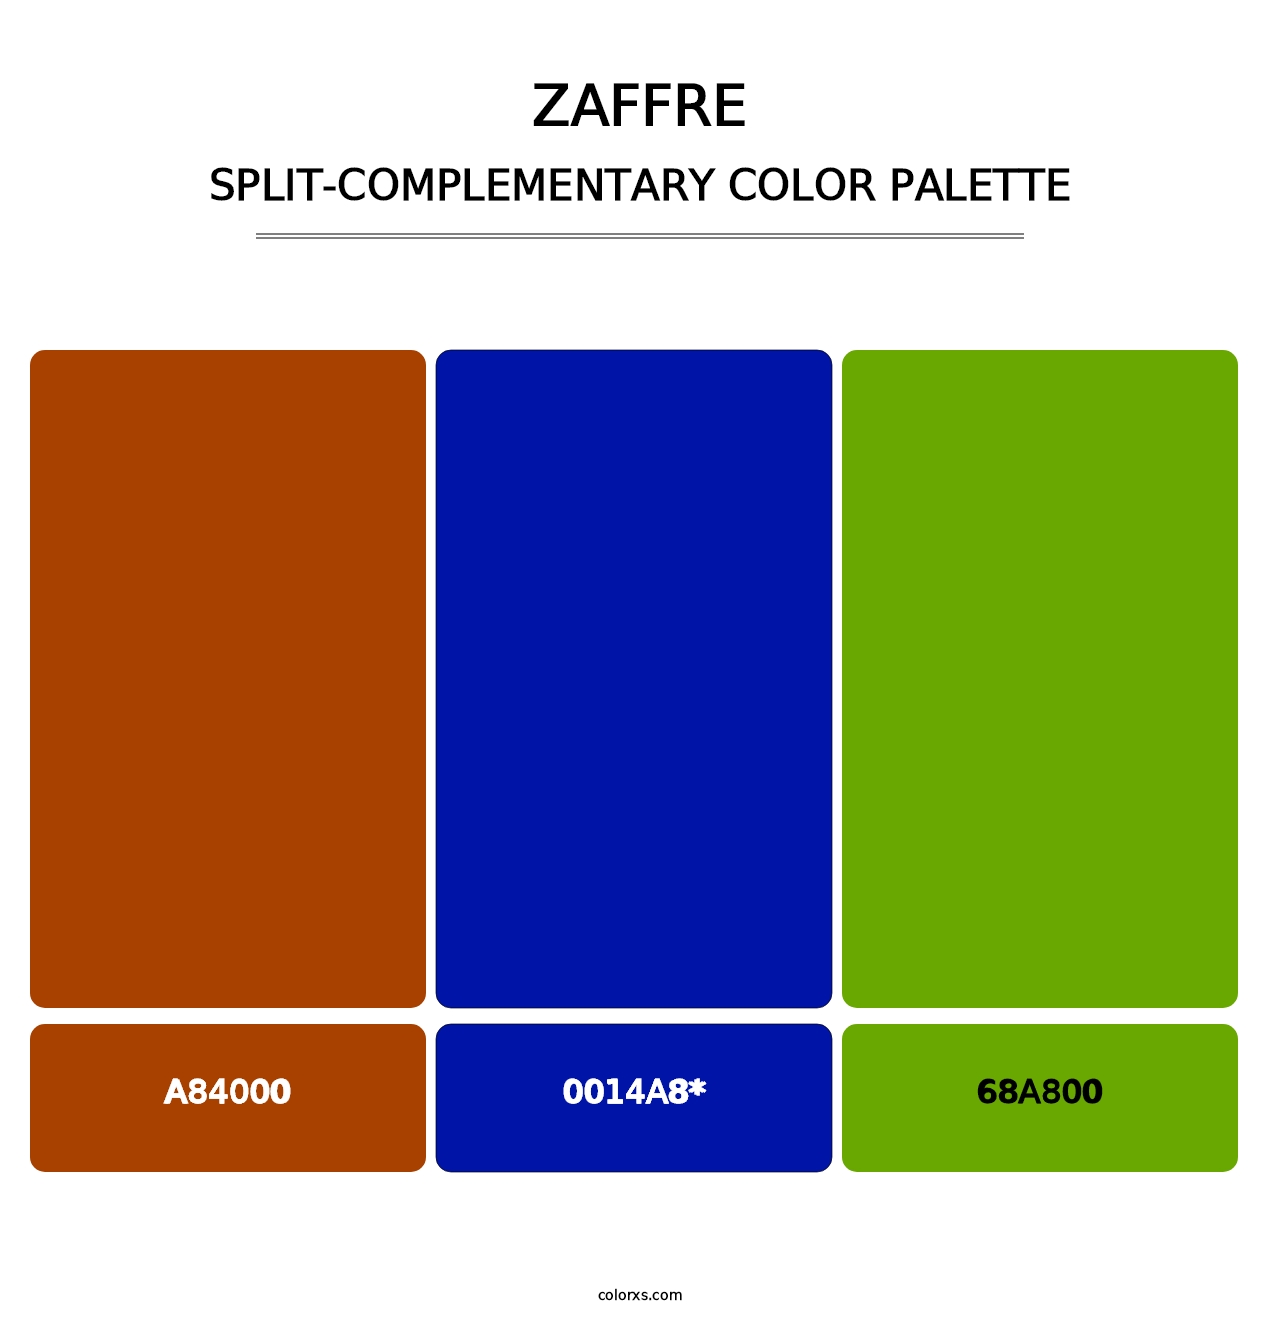 Zaffre - Split-Complementary Color Palette